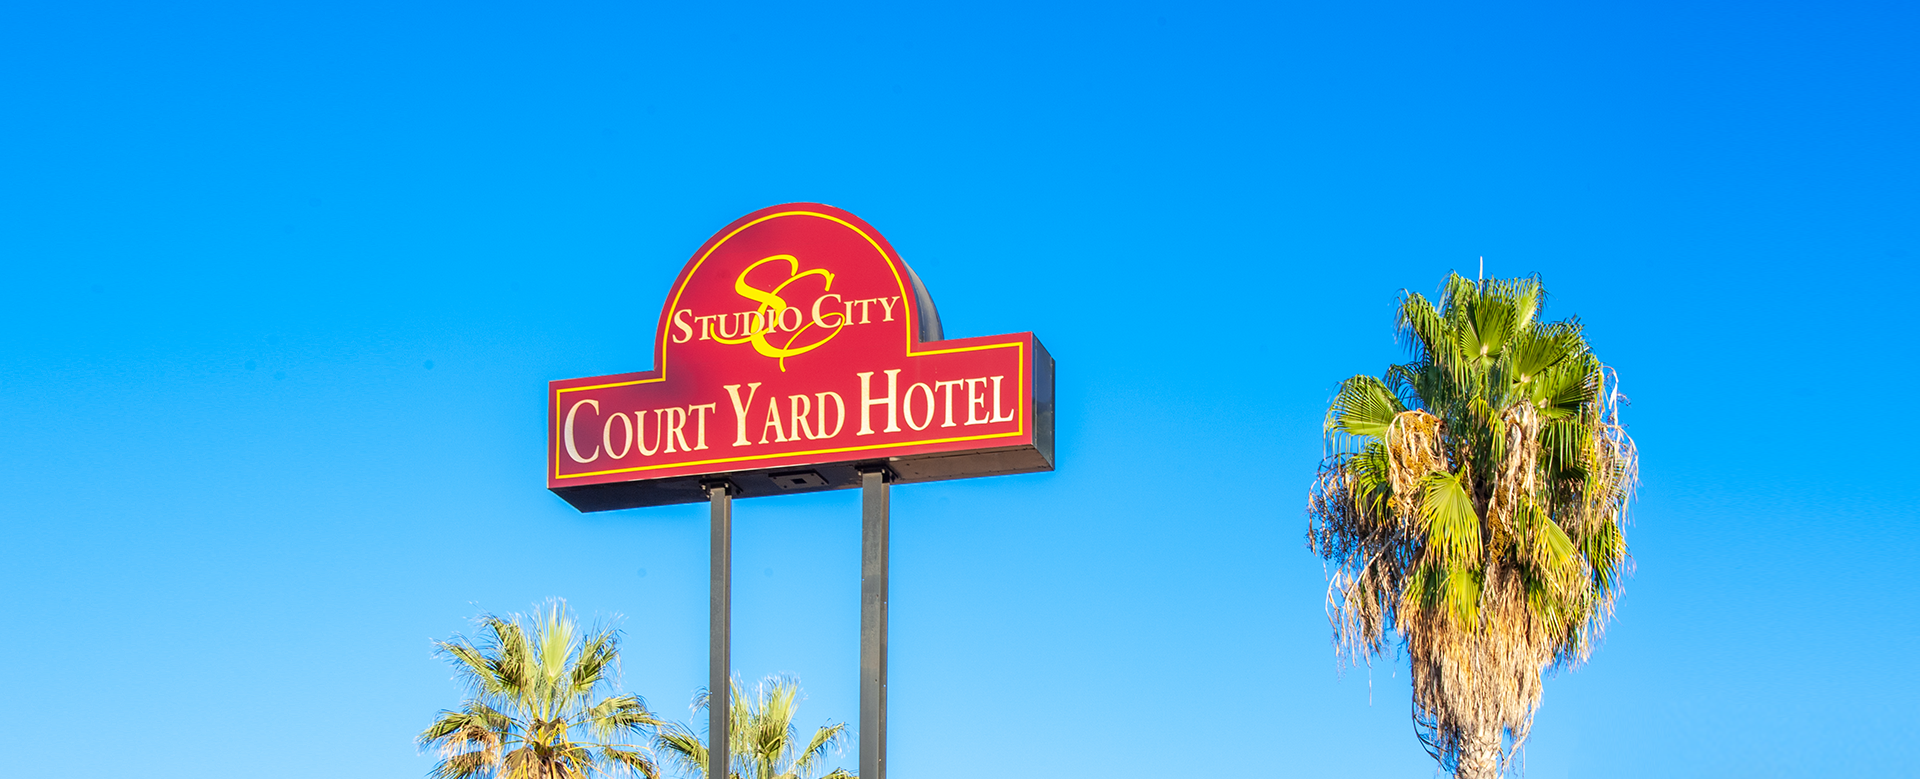 Hotels on Ventura Blvd Contact Us Studio City Courtyard